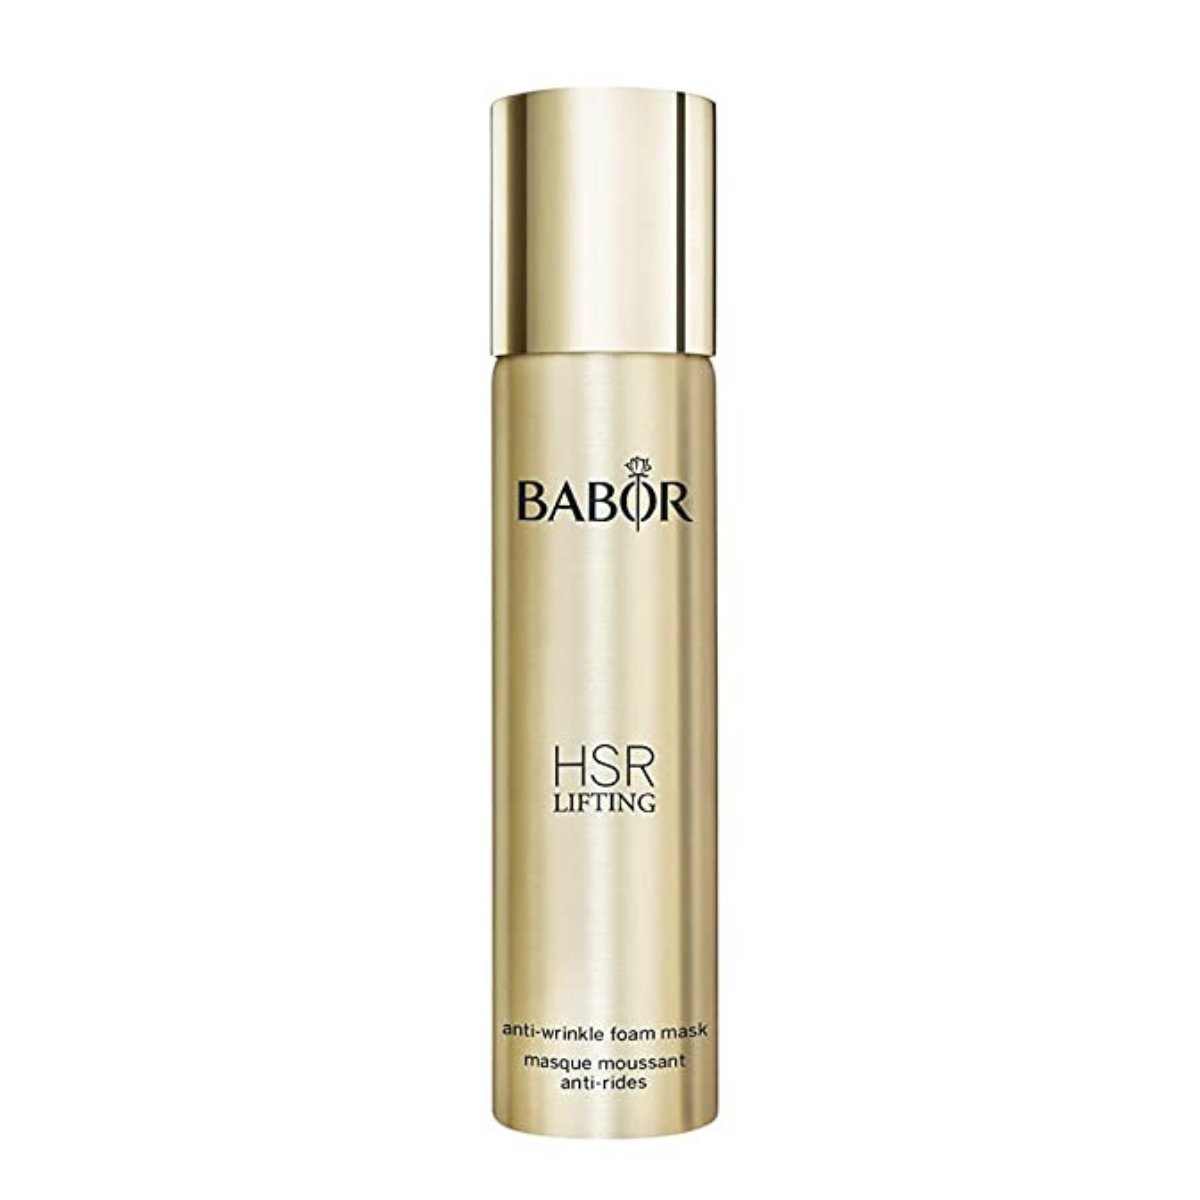 Babor - HSR Lifting Anti-Wrinkle Foam Mask 75ml - SkincareEssentials